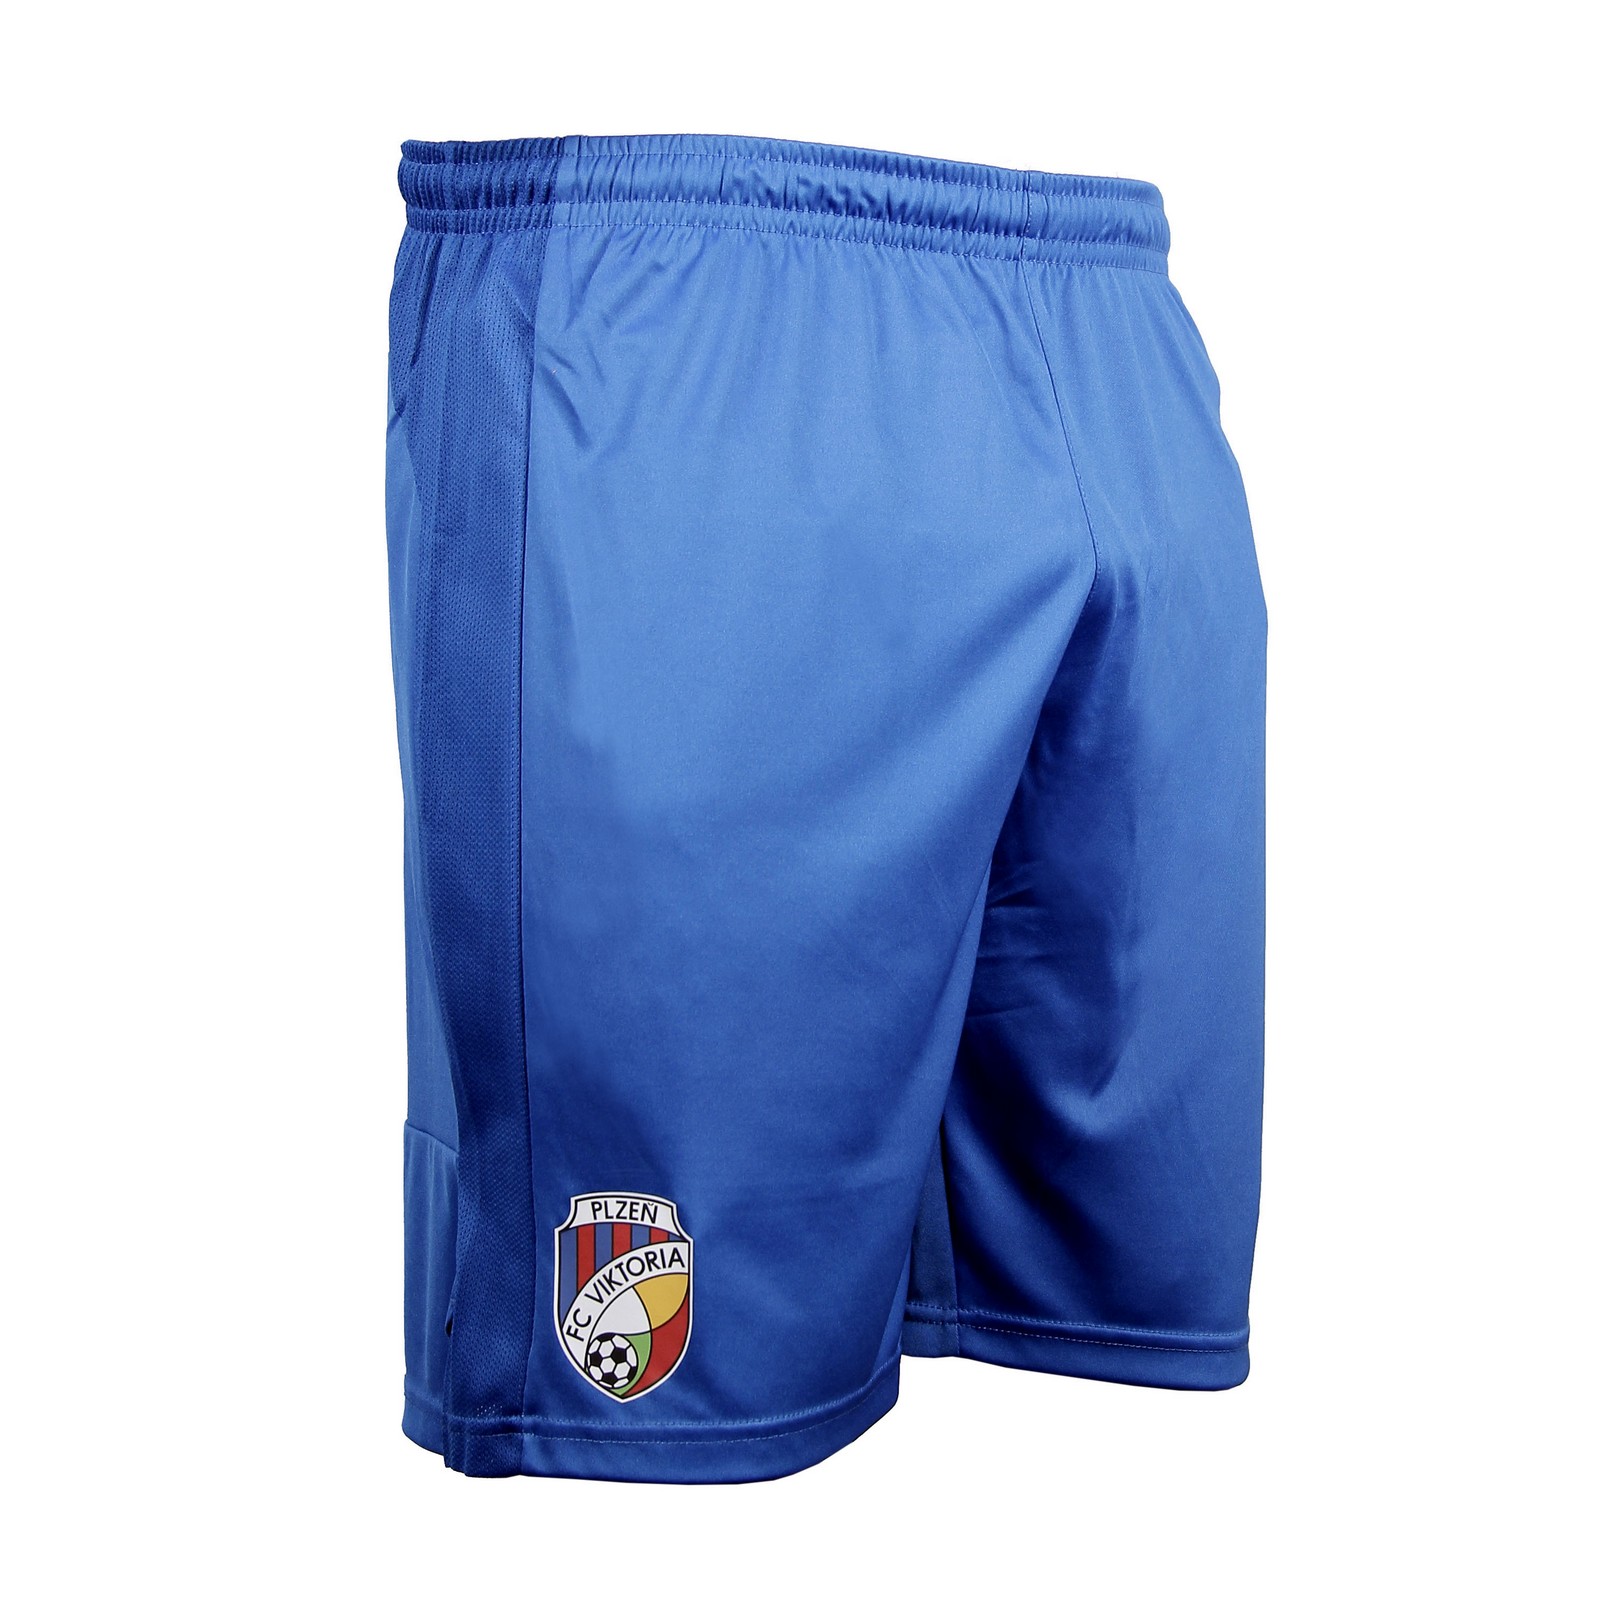 FC Viktoria Plzeň shorts